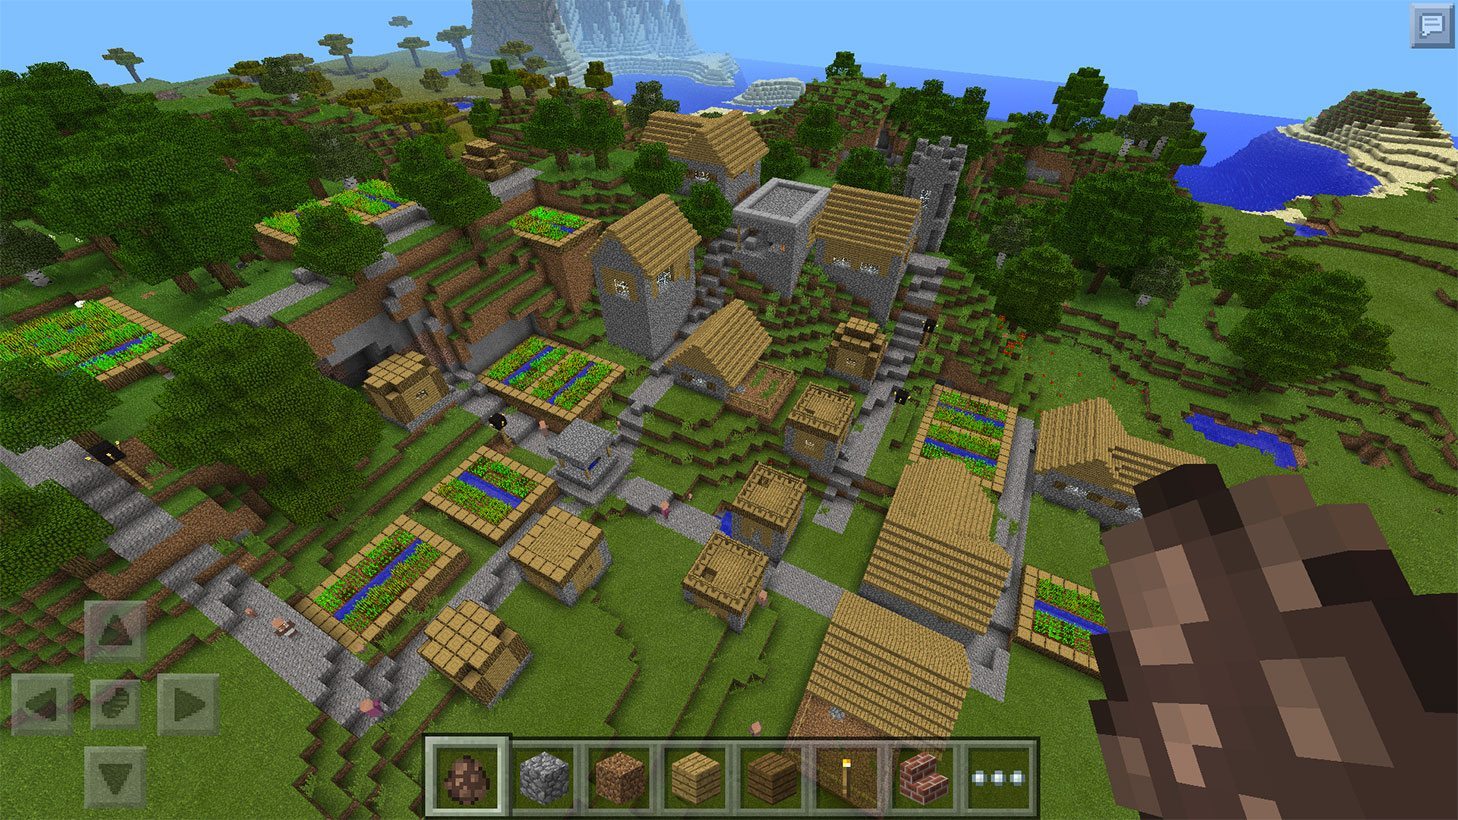 Screenshot from Minecraft PE